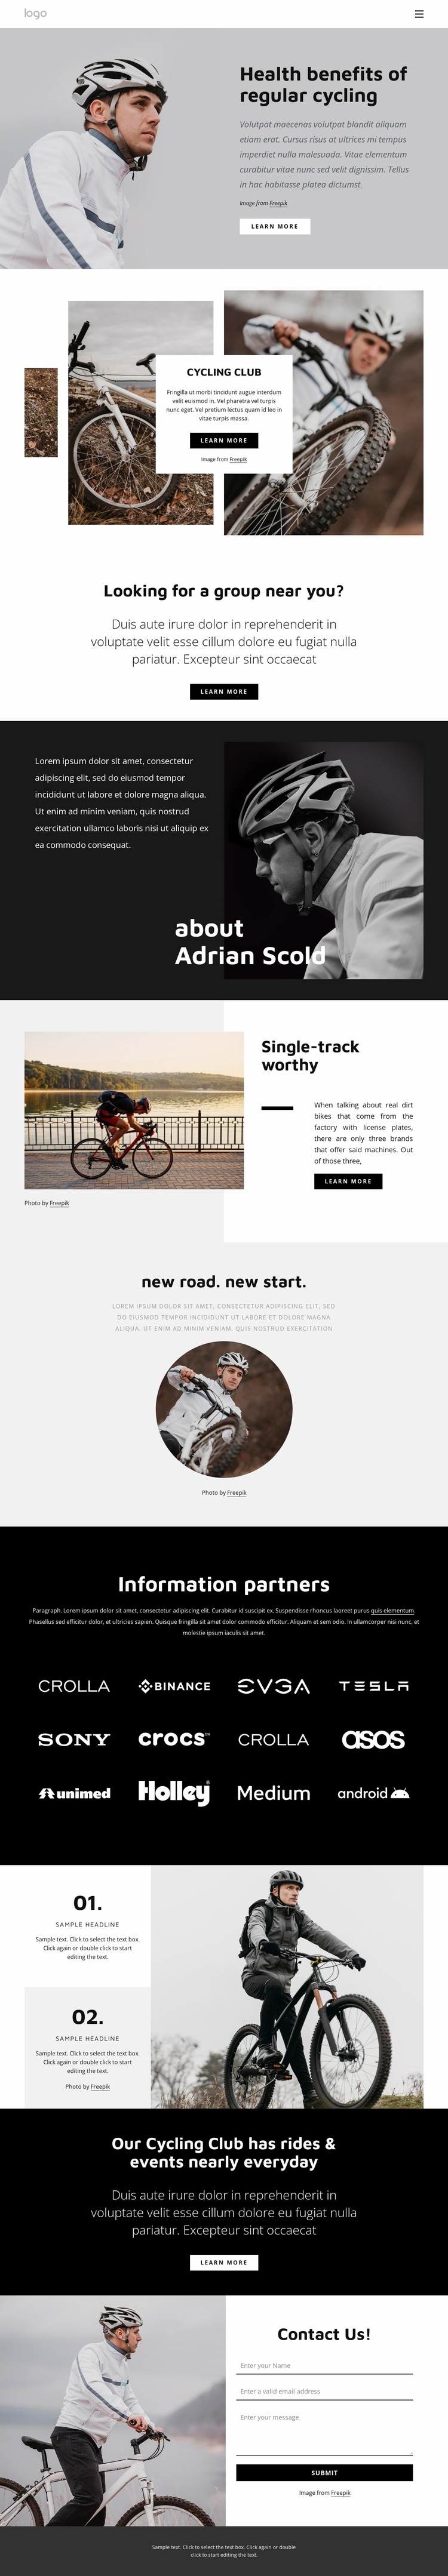 Benefits of regular cycling Website Mockup